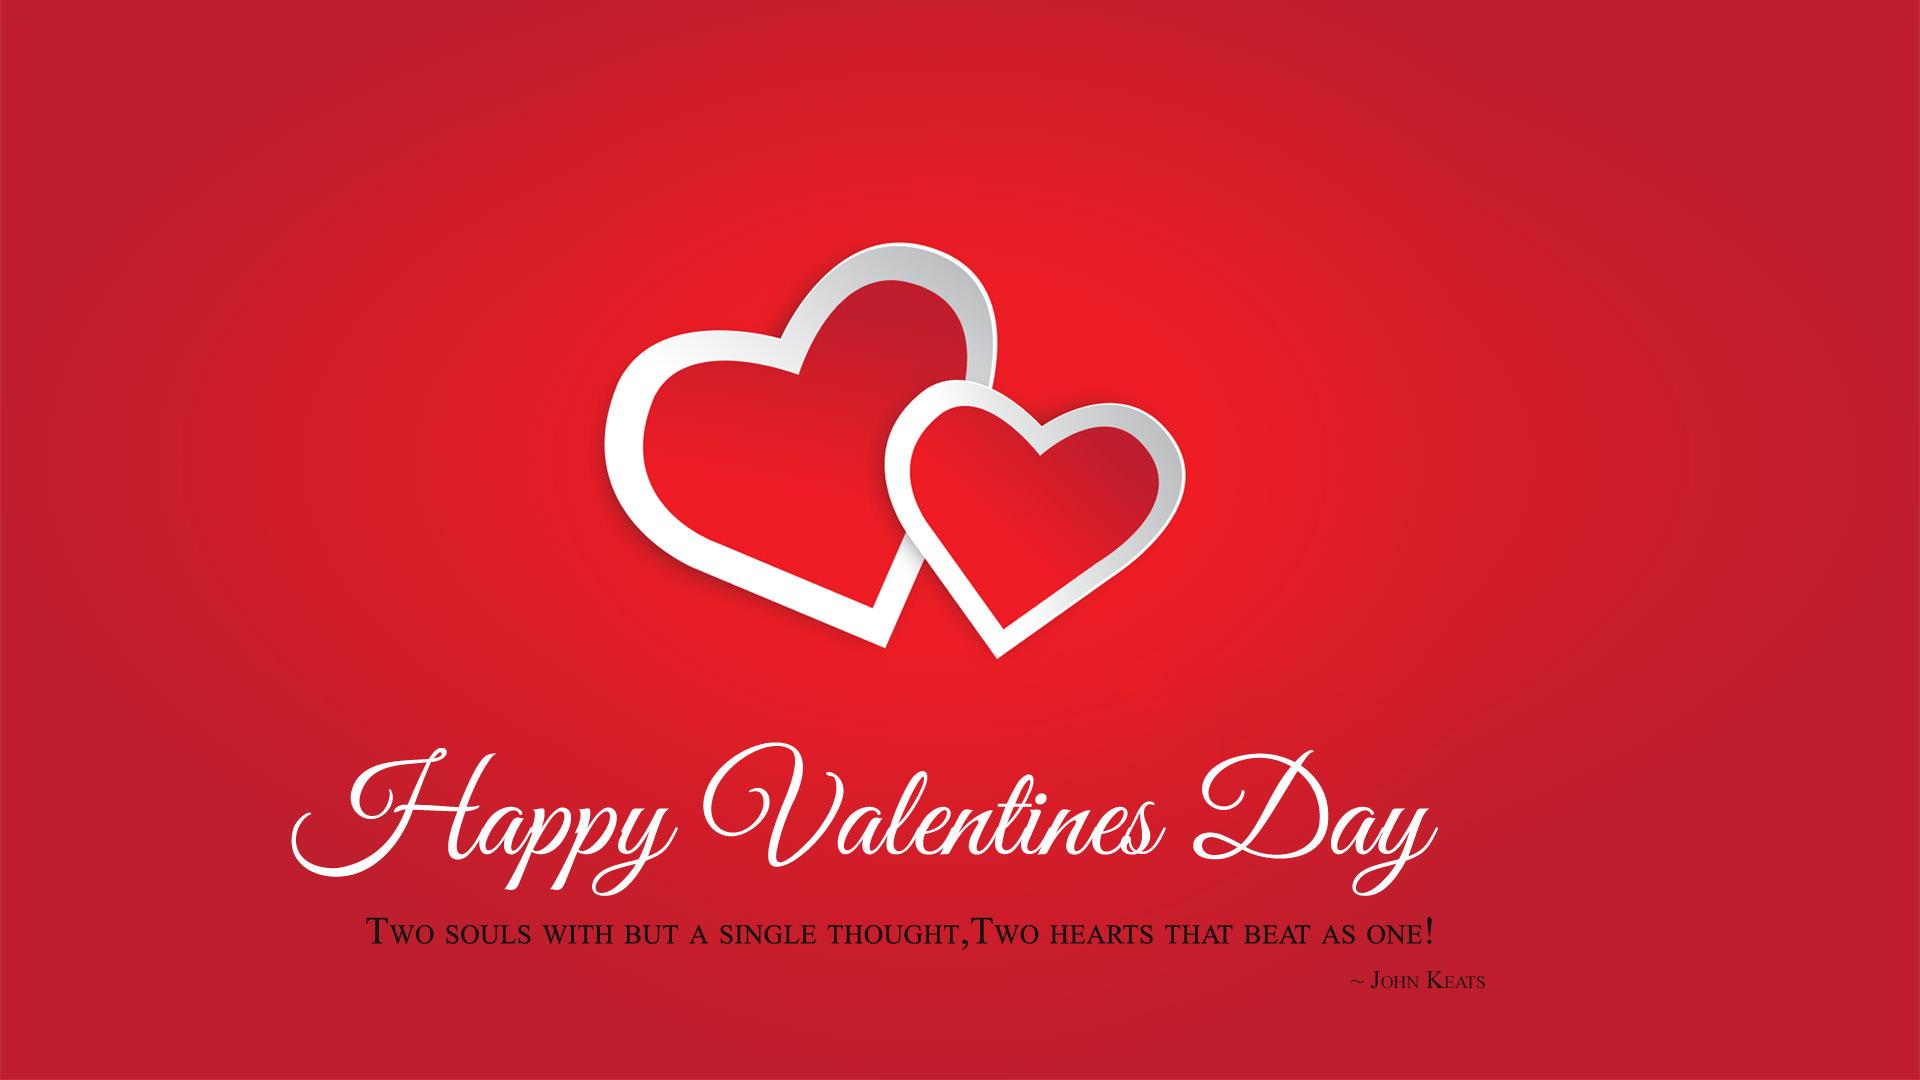 Free download 14 Feb Happy Valentines Day Wallpaper Full HD